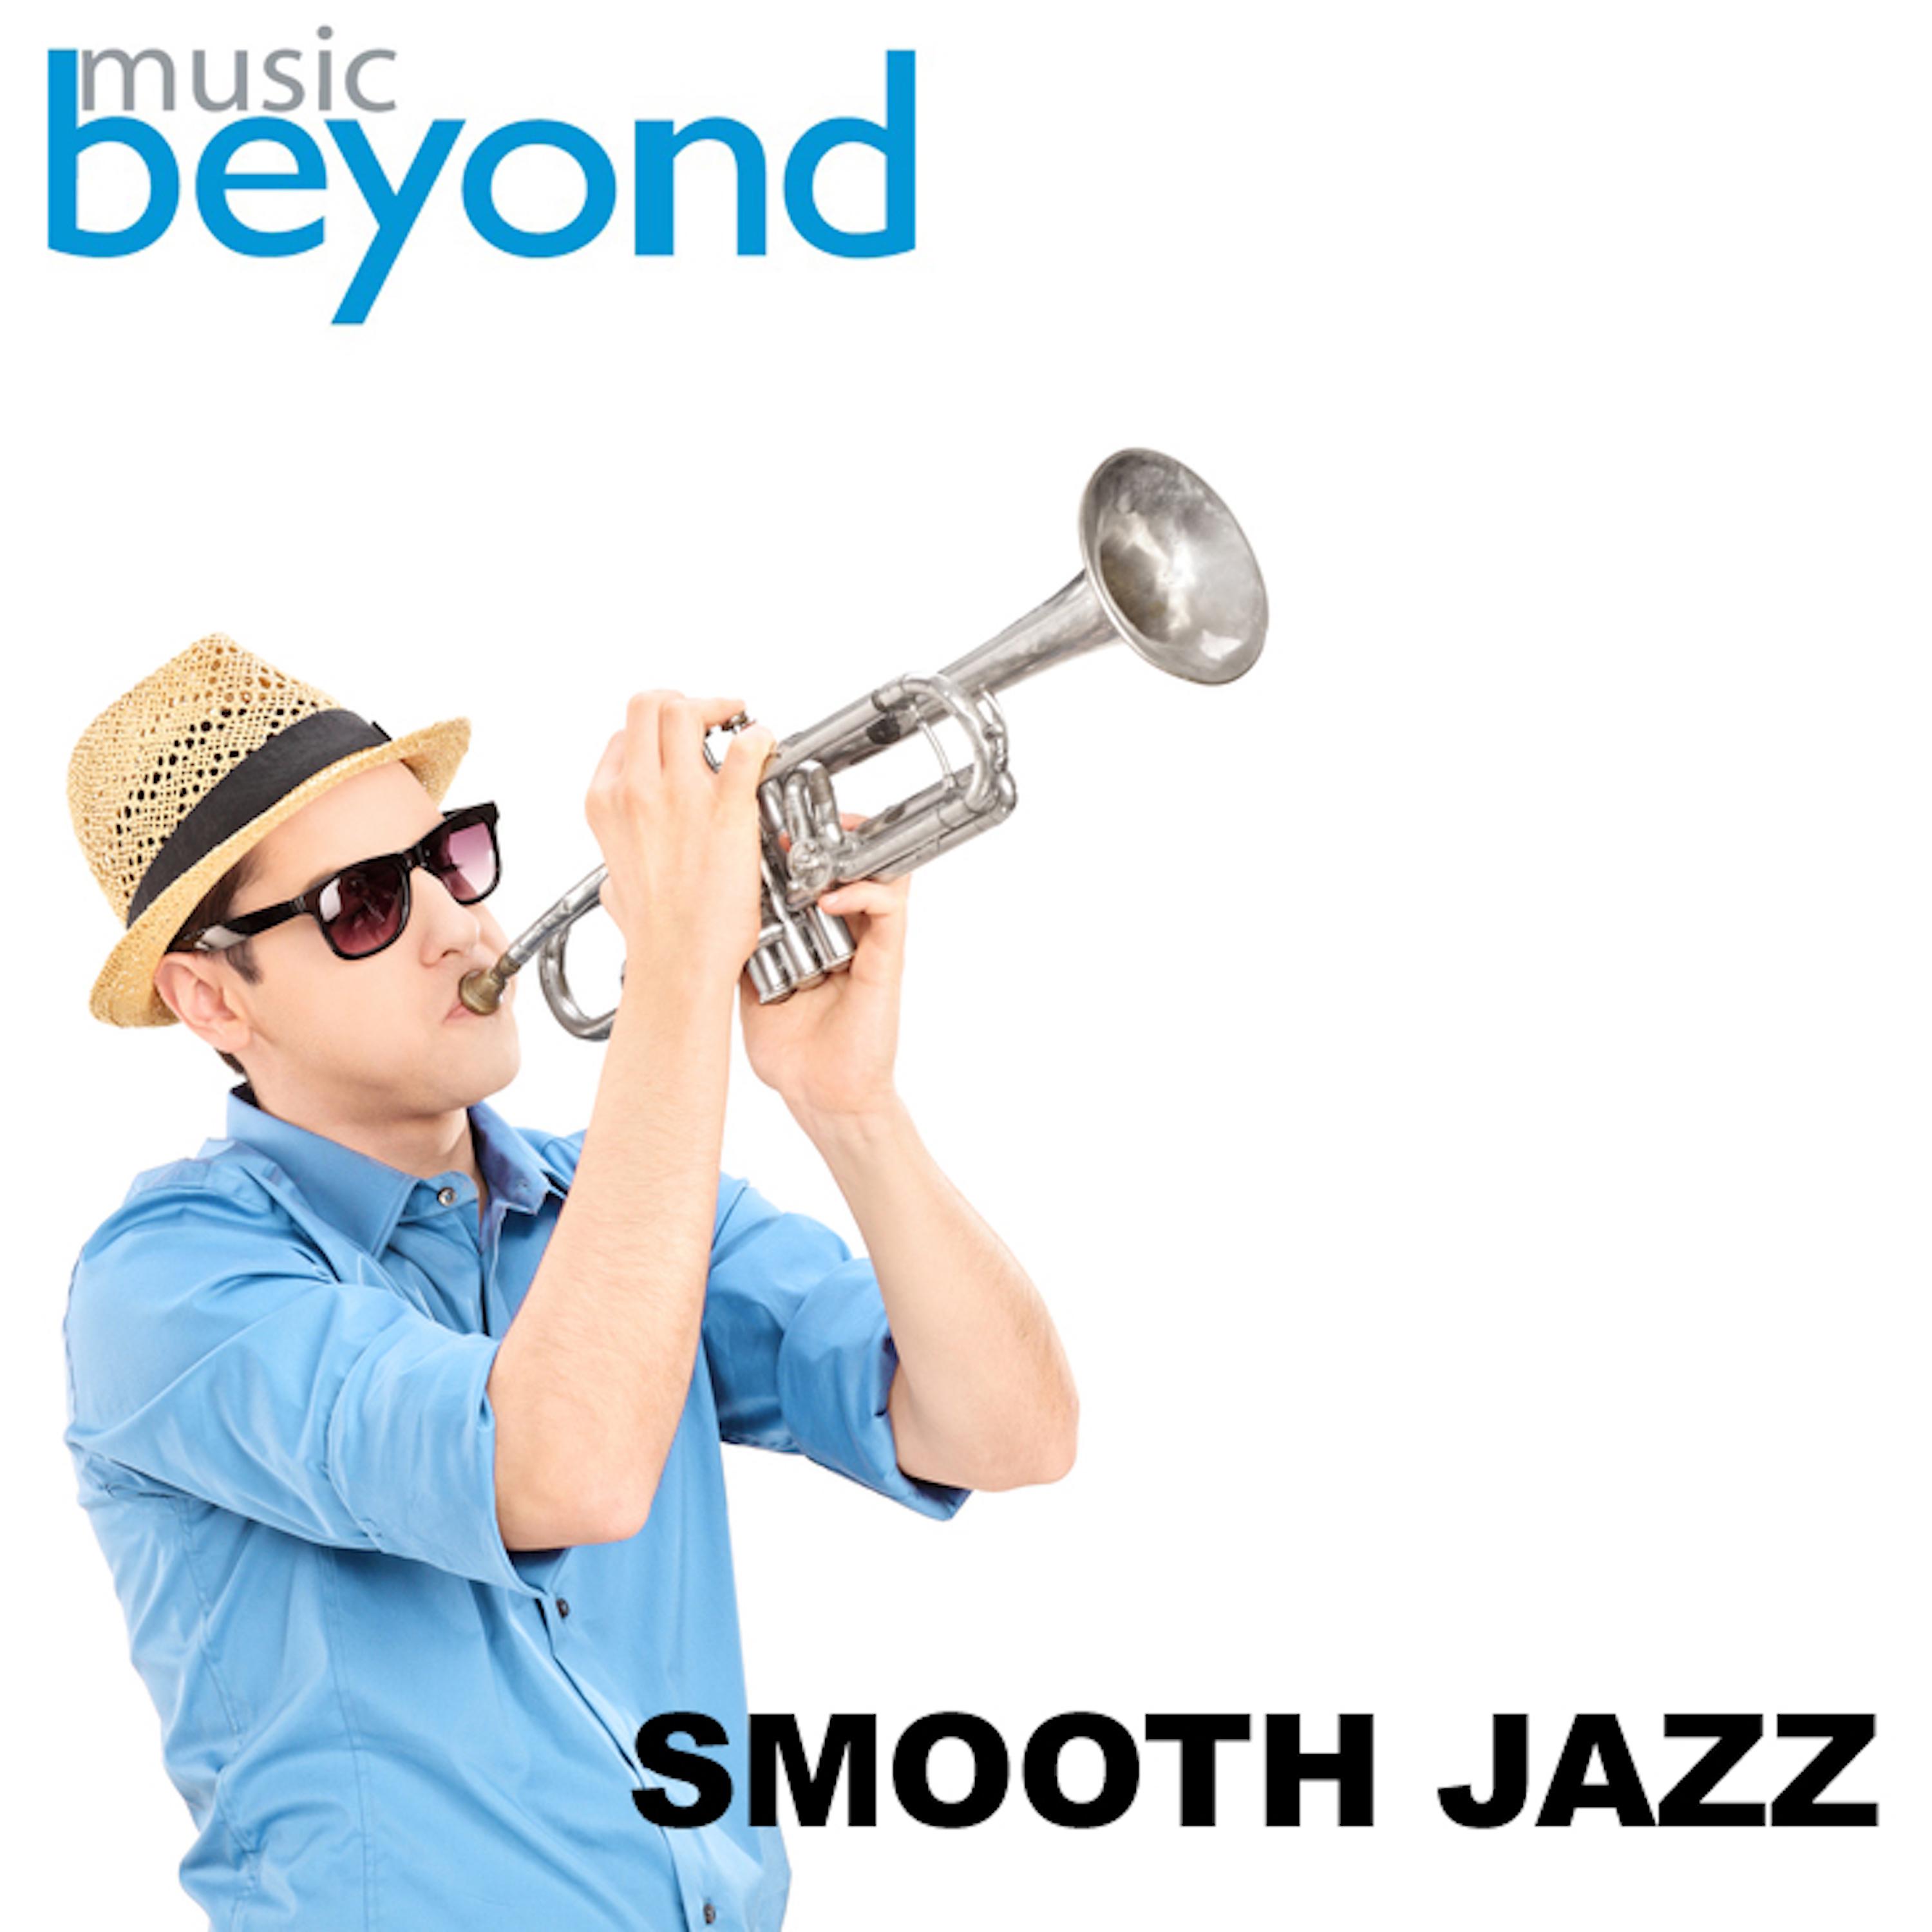 Smooth Jazz